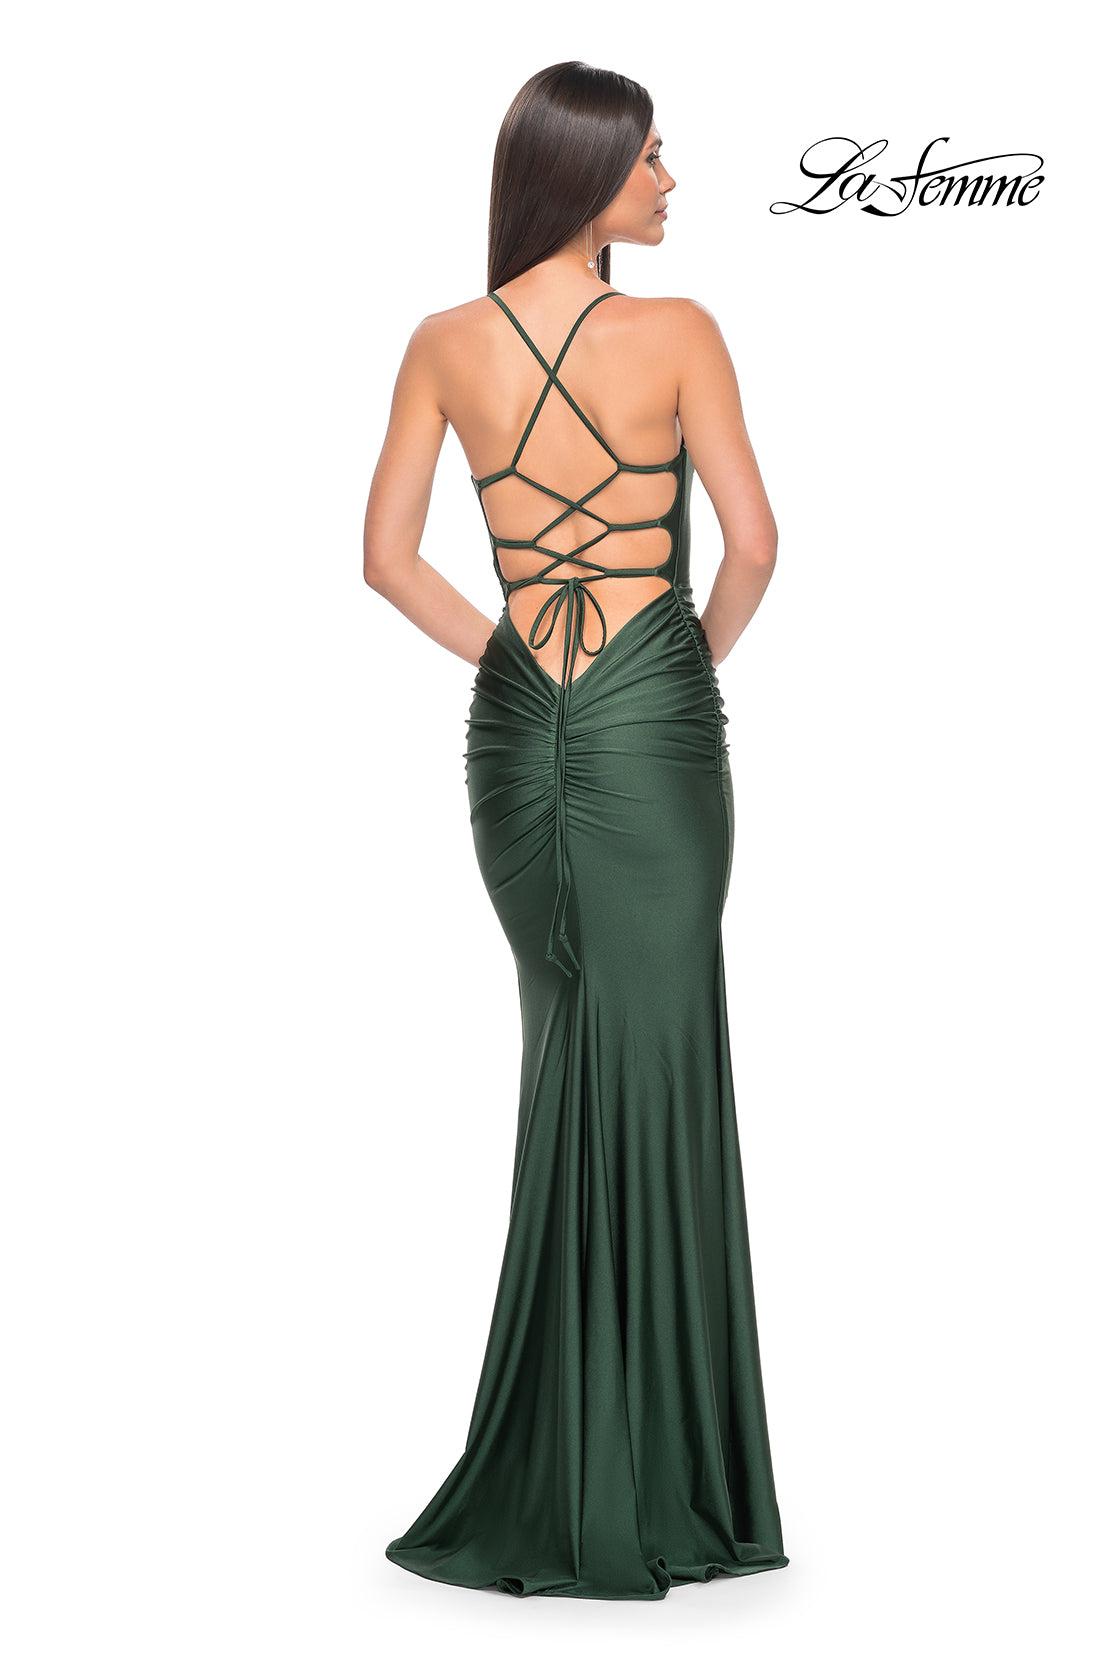 La-Femme-31618-V-Neck-Neckline-Criss-Cross-Back-Plain-Jersey-Column-Fitted-Emerald-Evening-Dress-B-Chic-Fashions-Prom-Dress